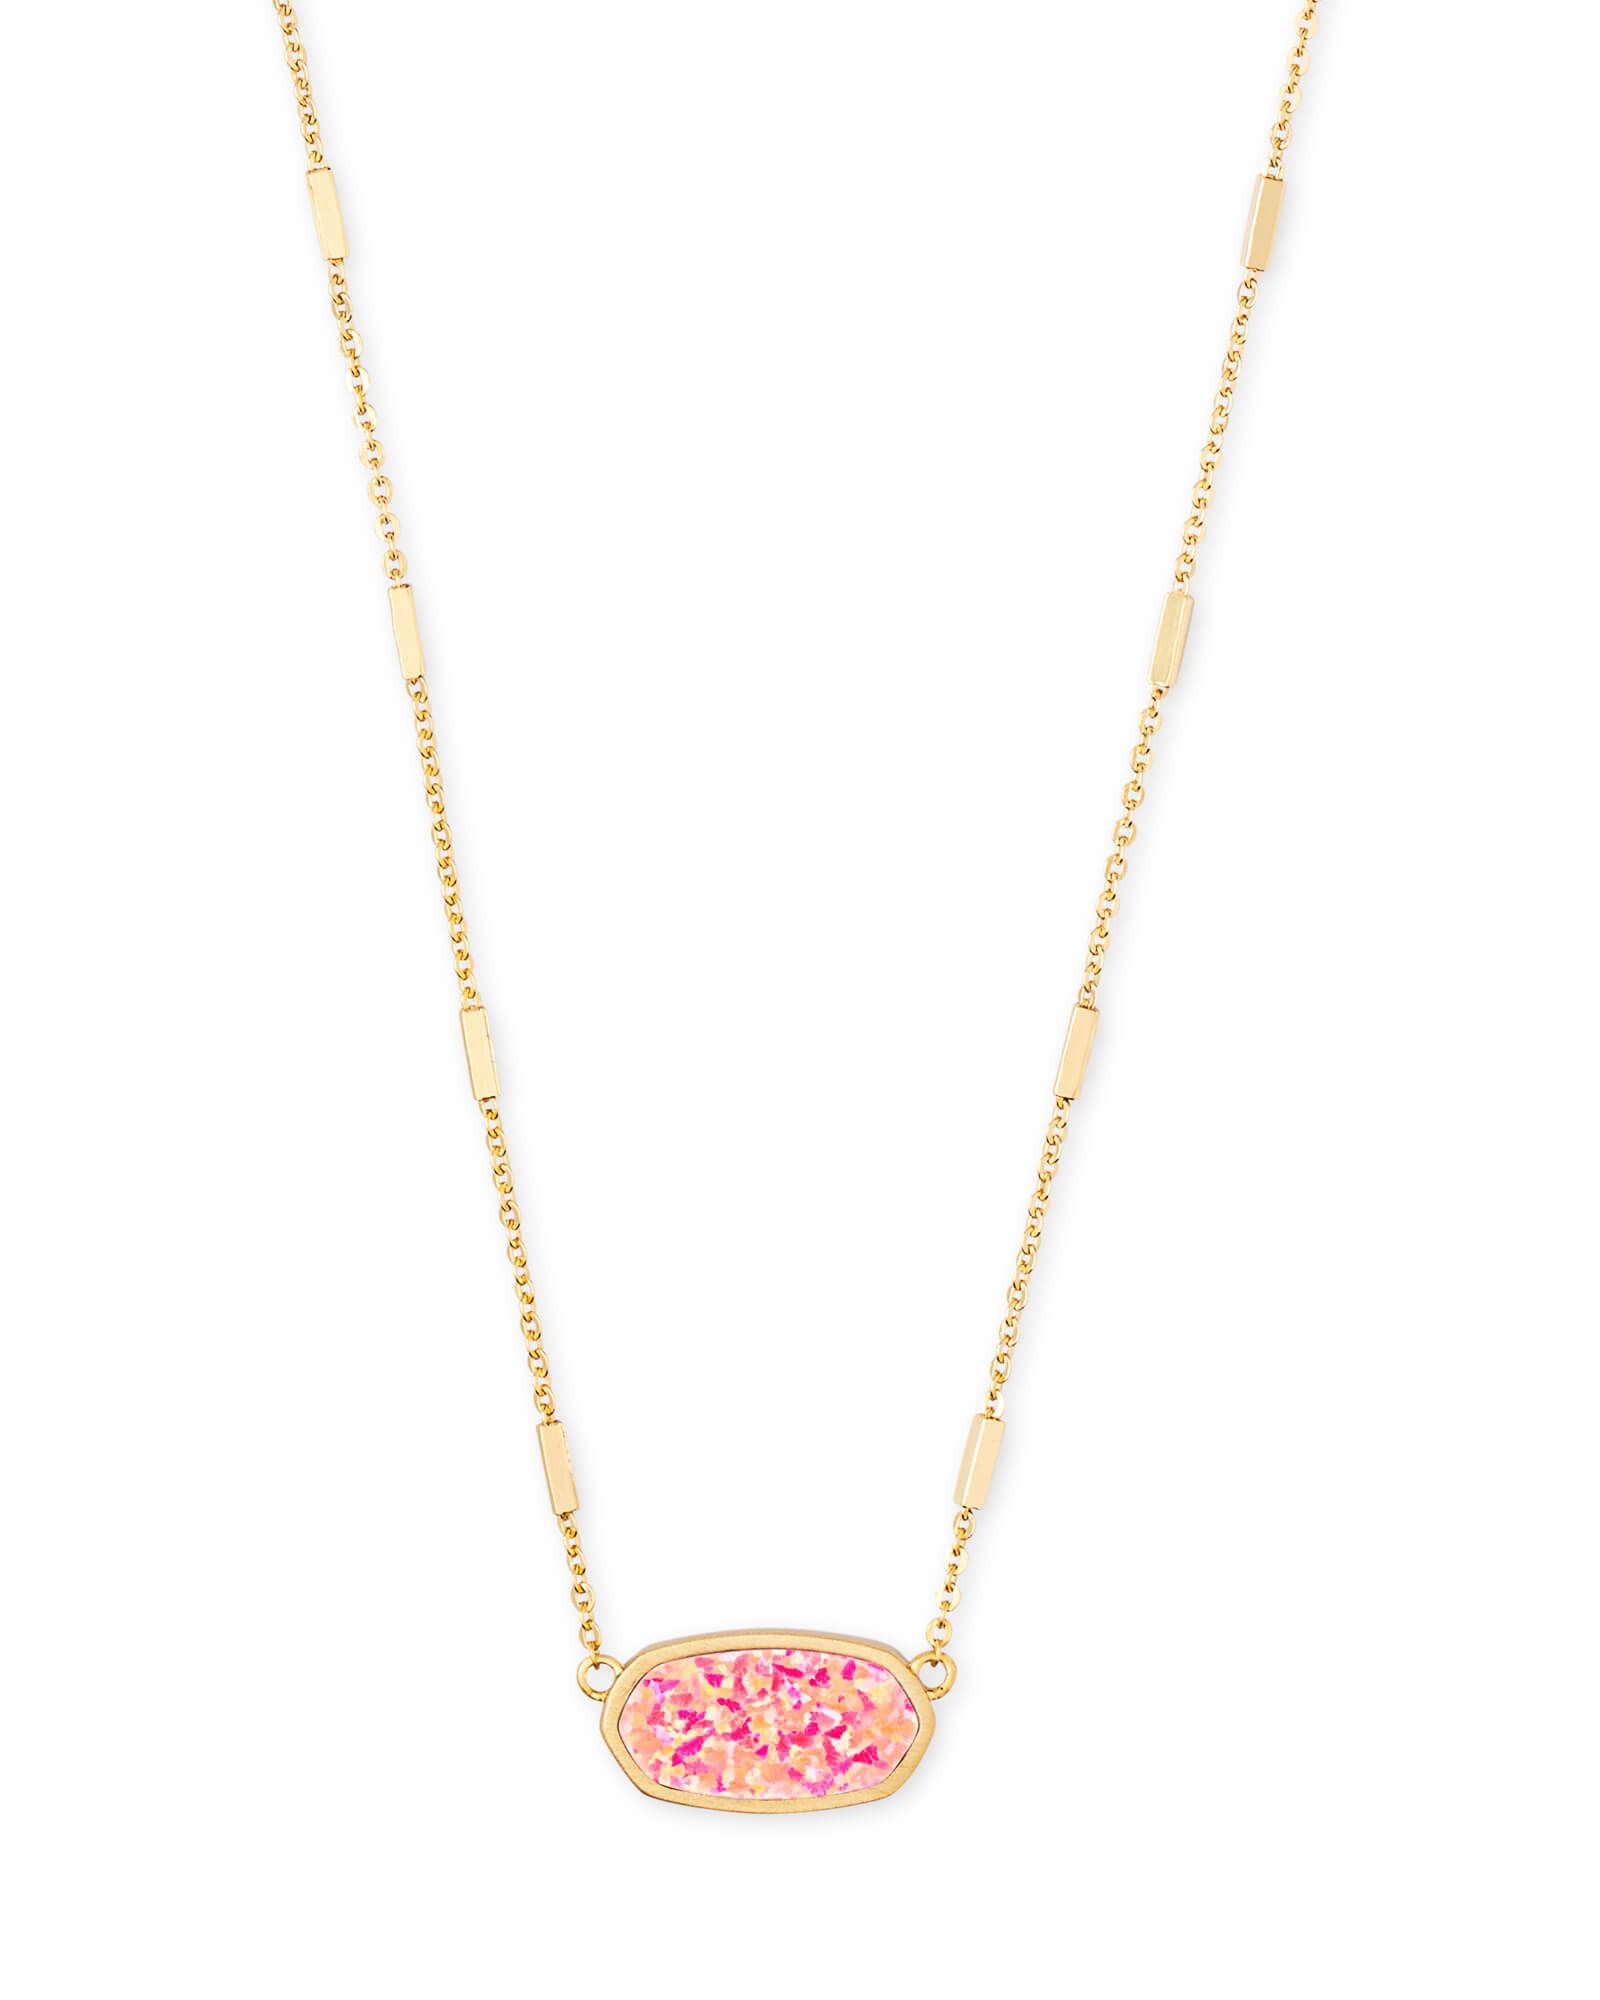 Miley Gold Pendant Necklace in Hot Pink Kyocera Opal | Kendra Scott | Kendra Scott